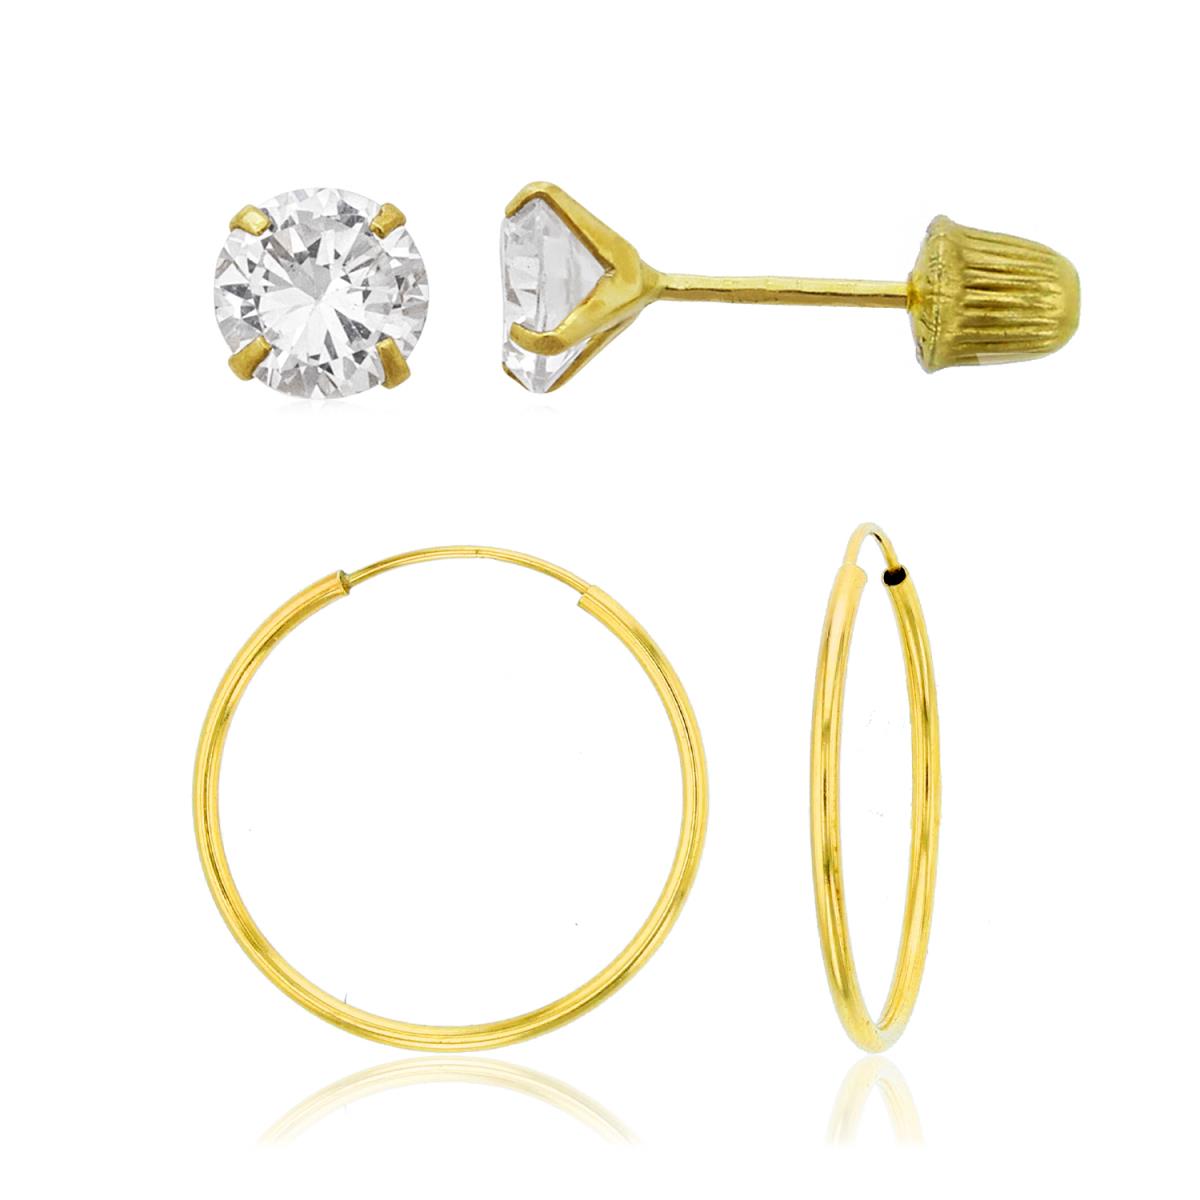 14K Yellow Gold 3mm Rd Solitaire Ball ScrewBack & 1x10mm Hoop Earrings Set